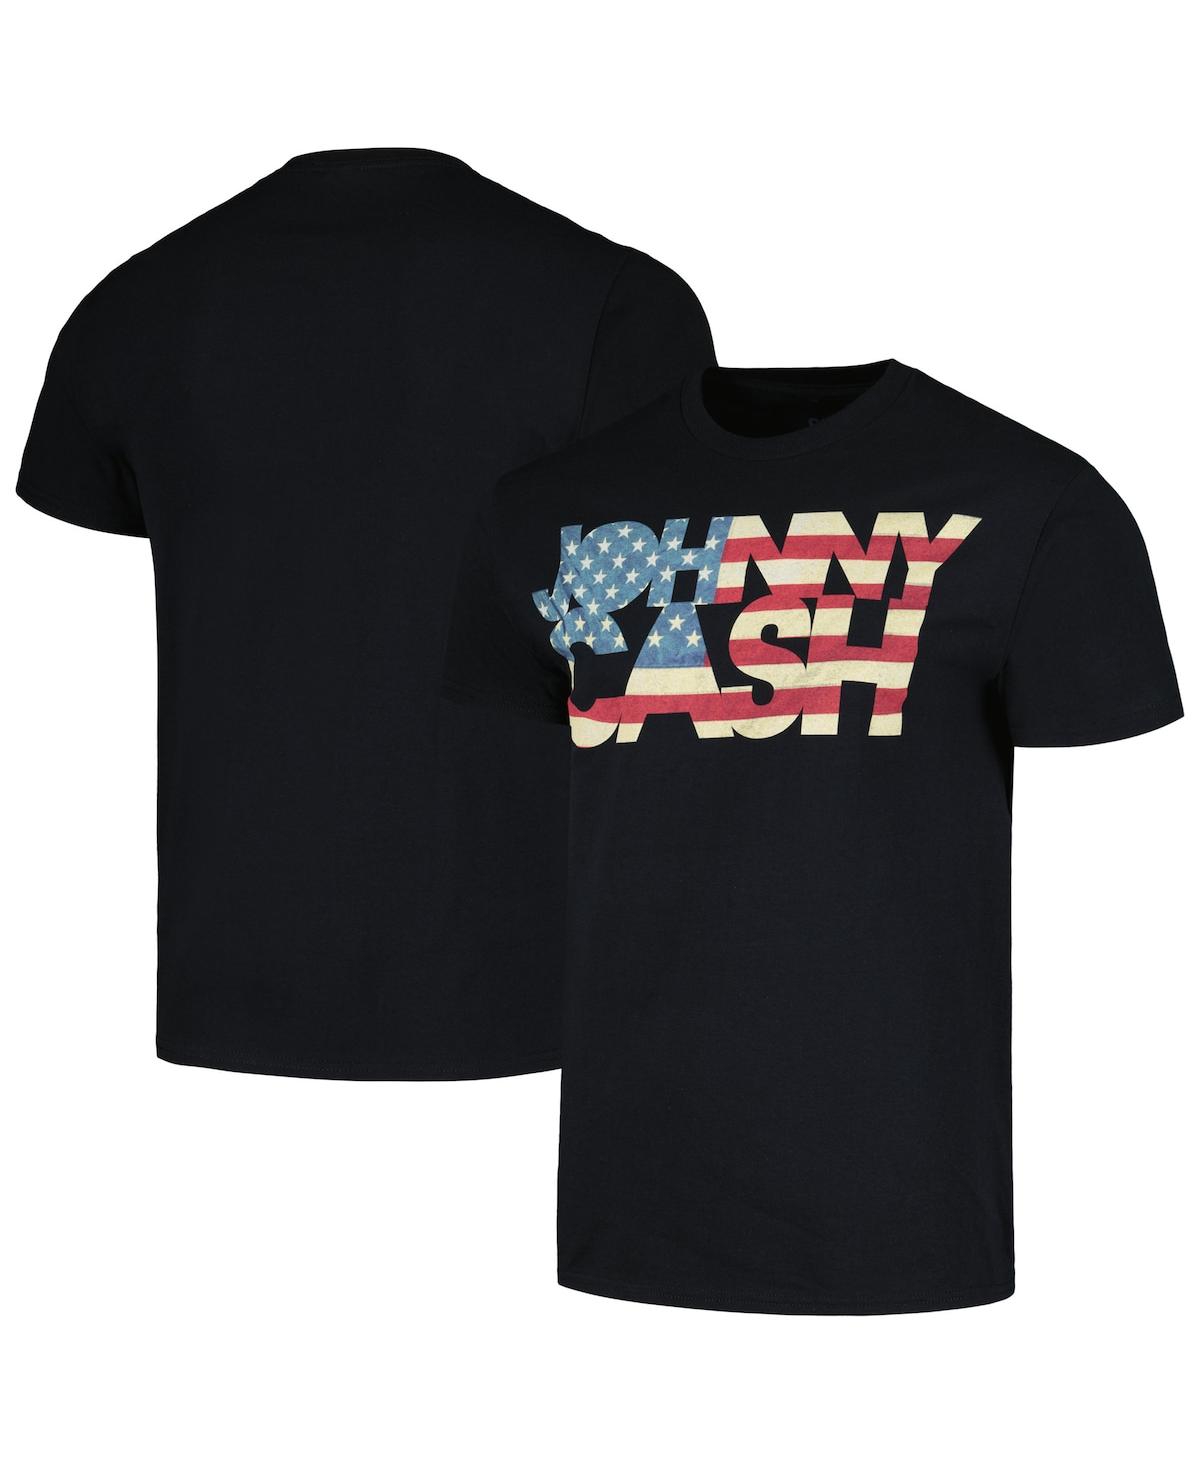 Men's and Women's Black Johnny Cash Ragged Old Flag T-shirt - Black